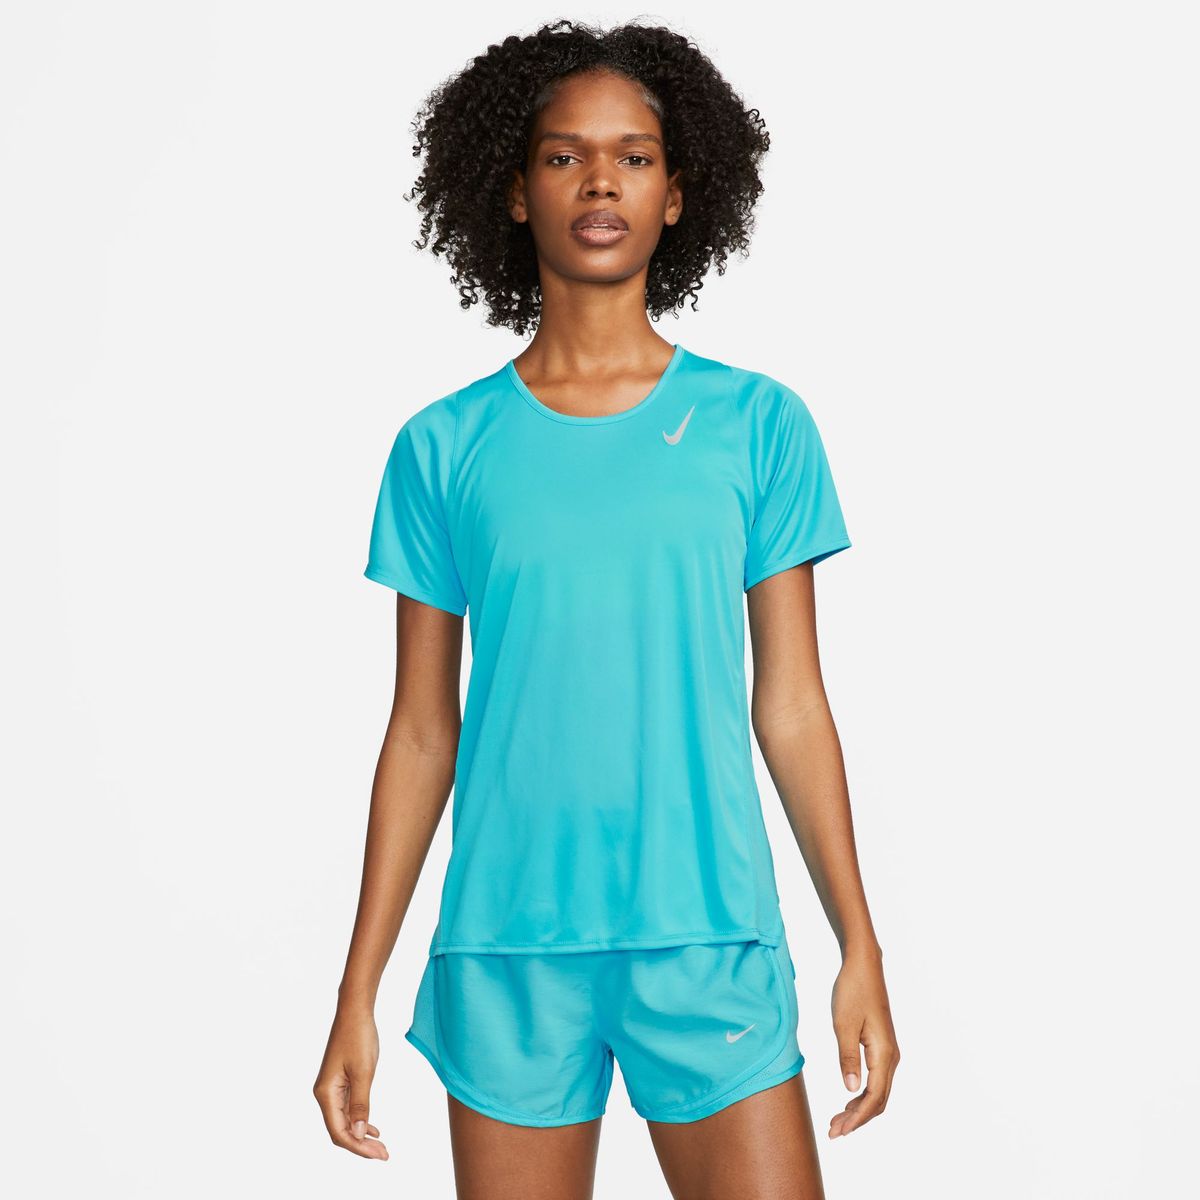 Nike Women's Dri-FIT Race Short-Sleeve Running Top - Blue/Silver | Shop ...